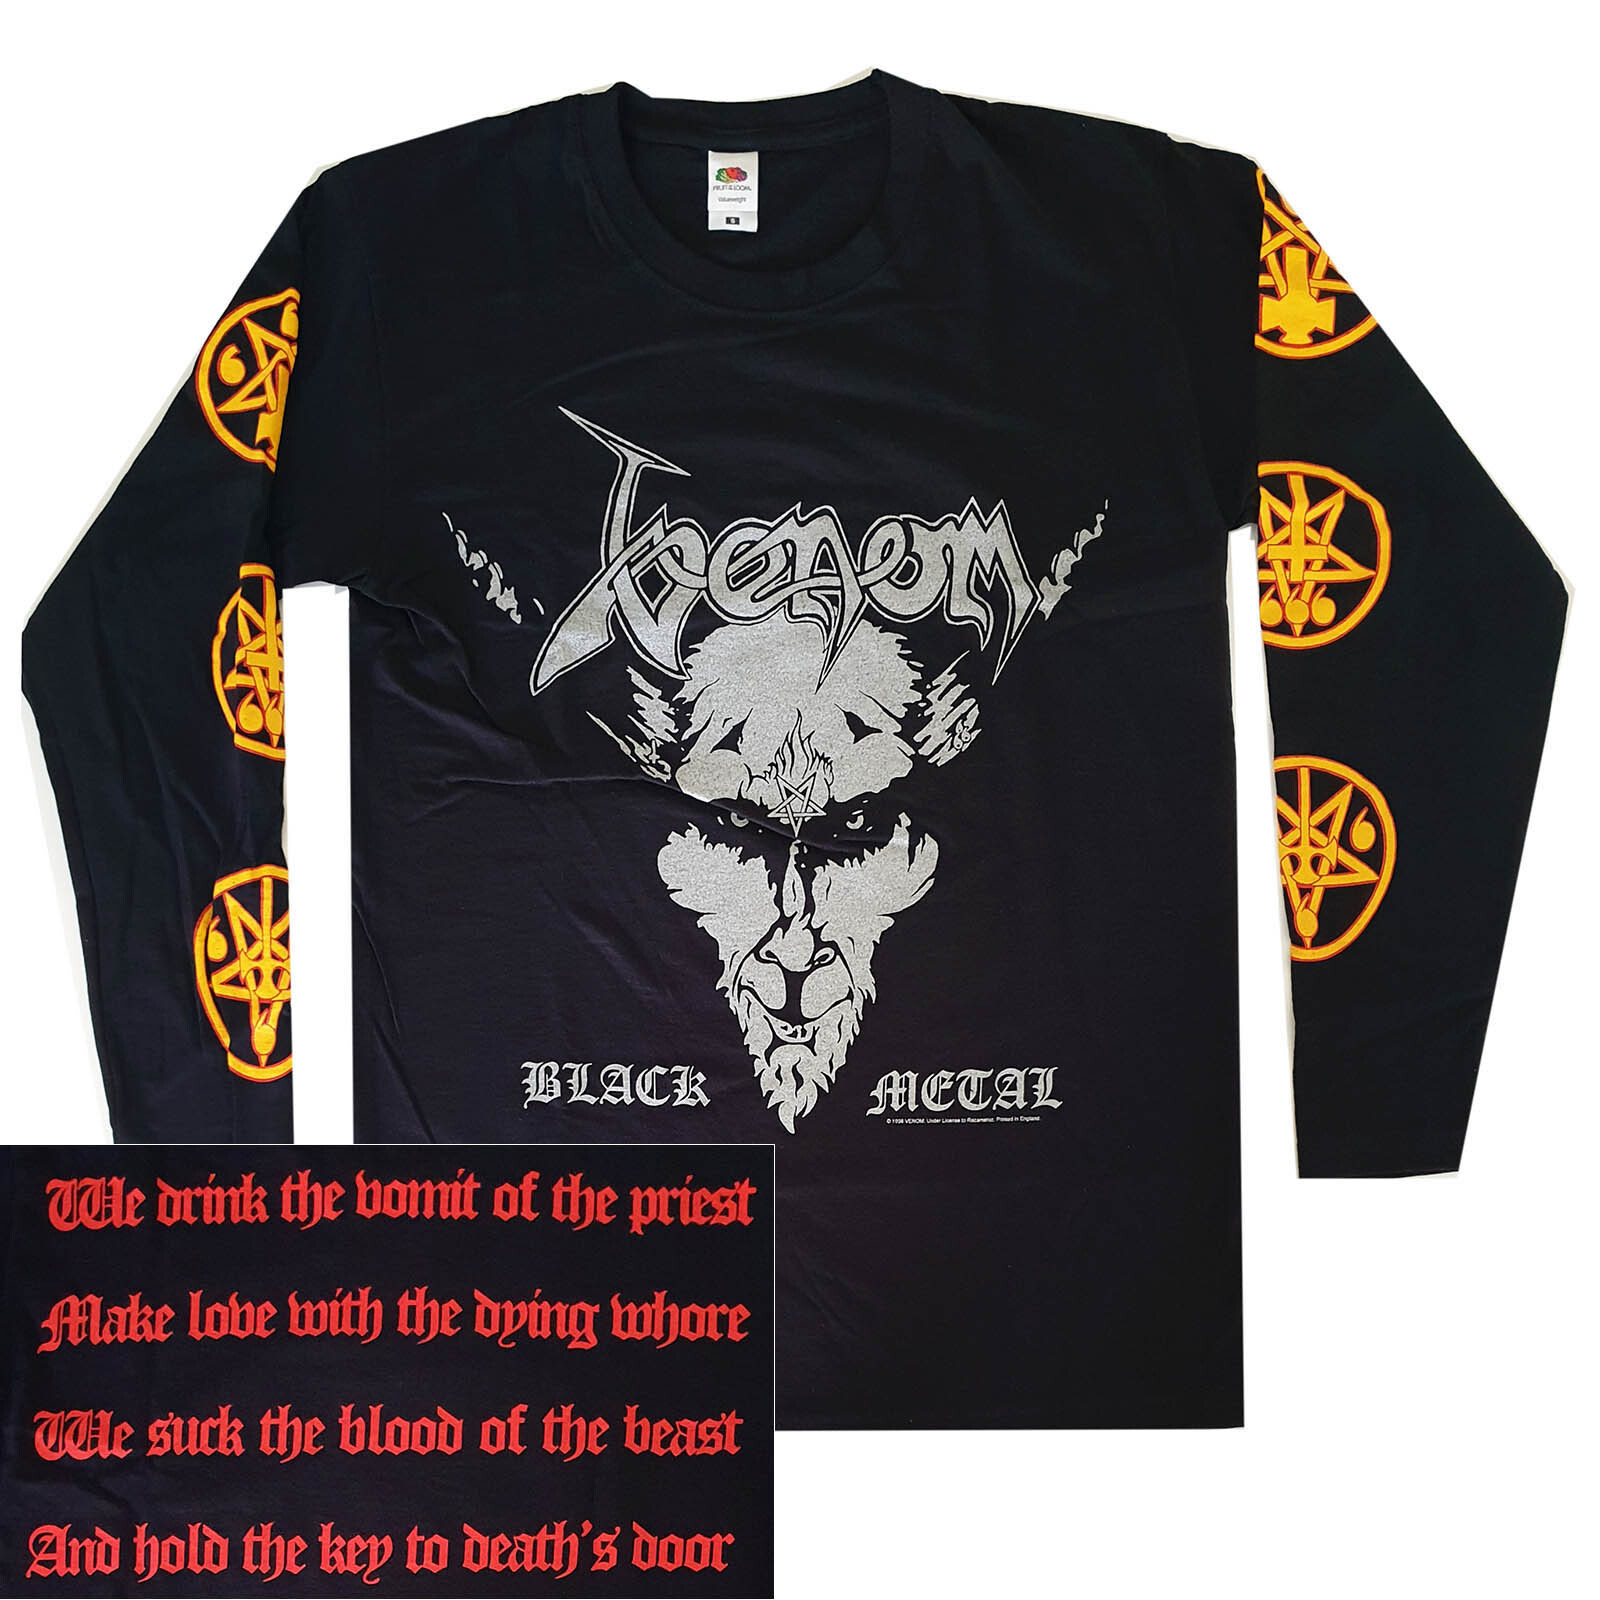 Metal and rock sweatshirts for lovers of hard music. CAVALERA